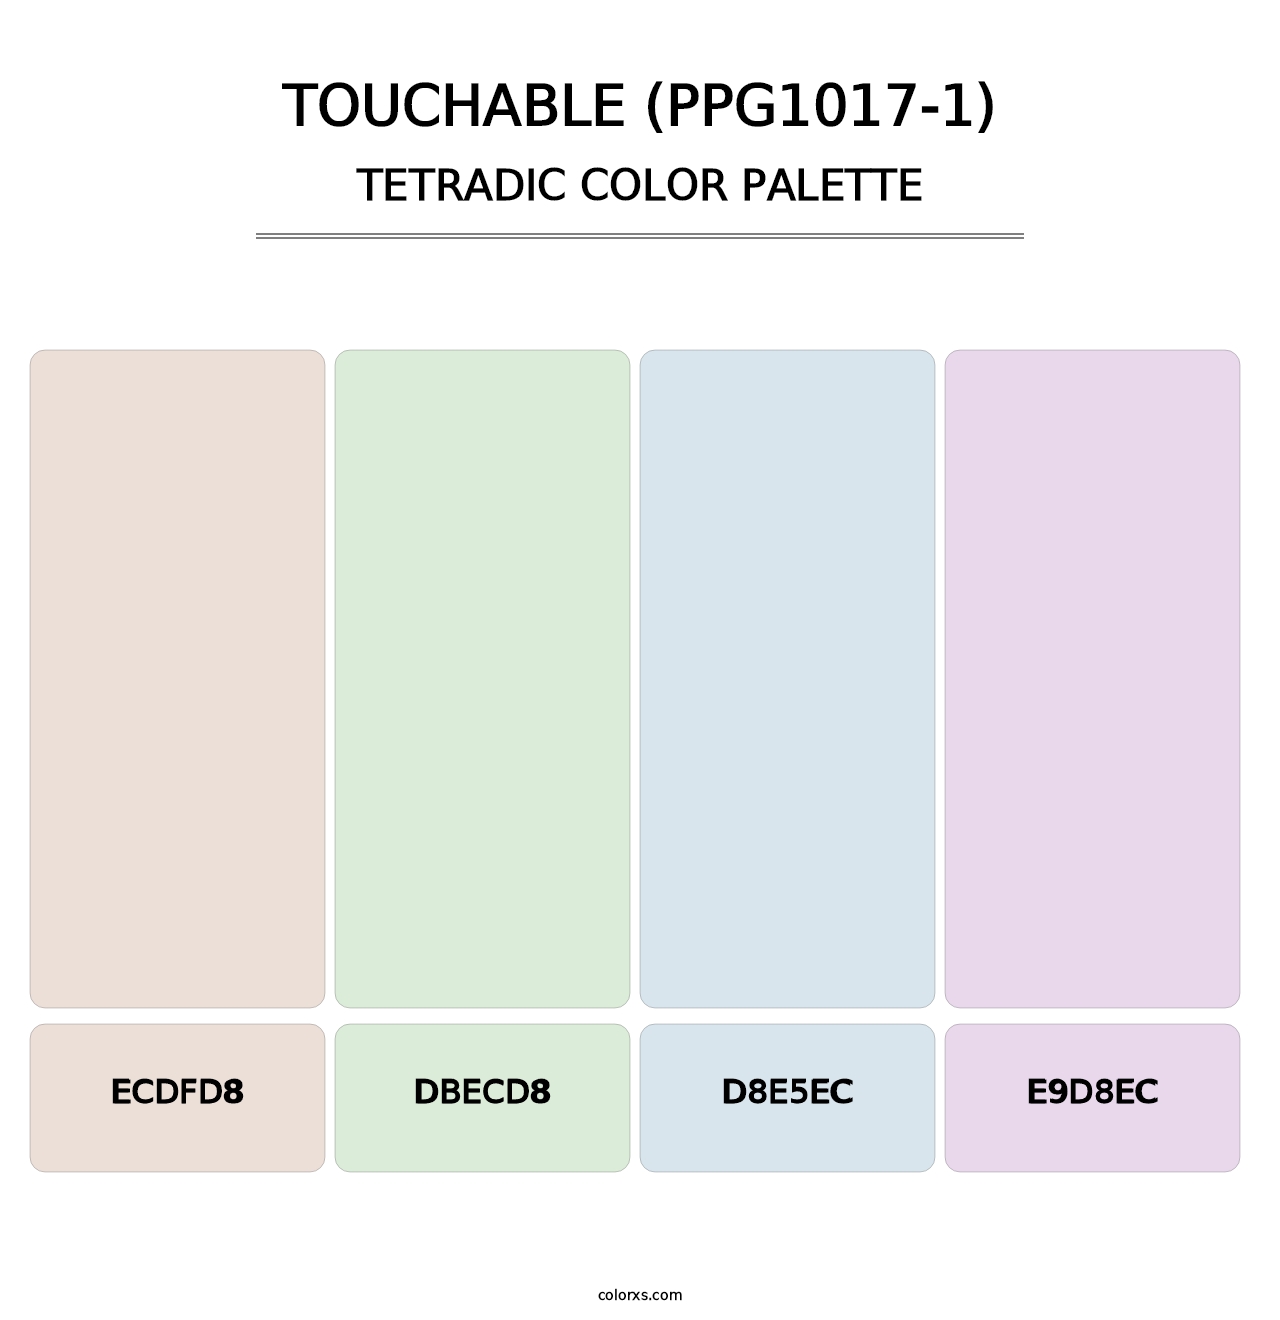 Touchable (PPG1017-1) - Tetradic Color Palette